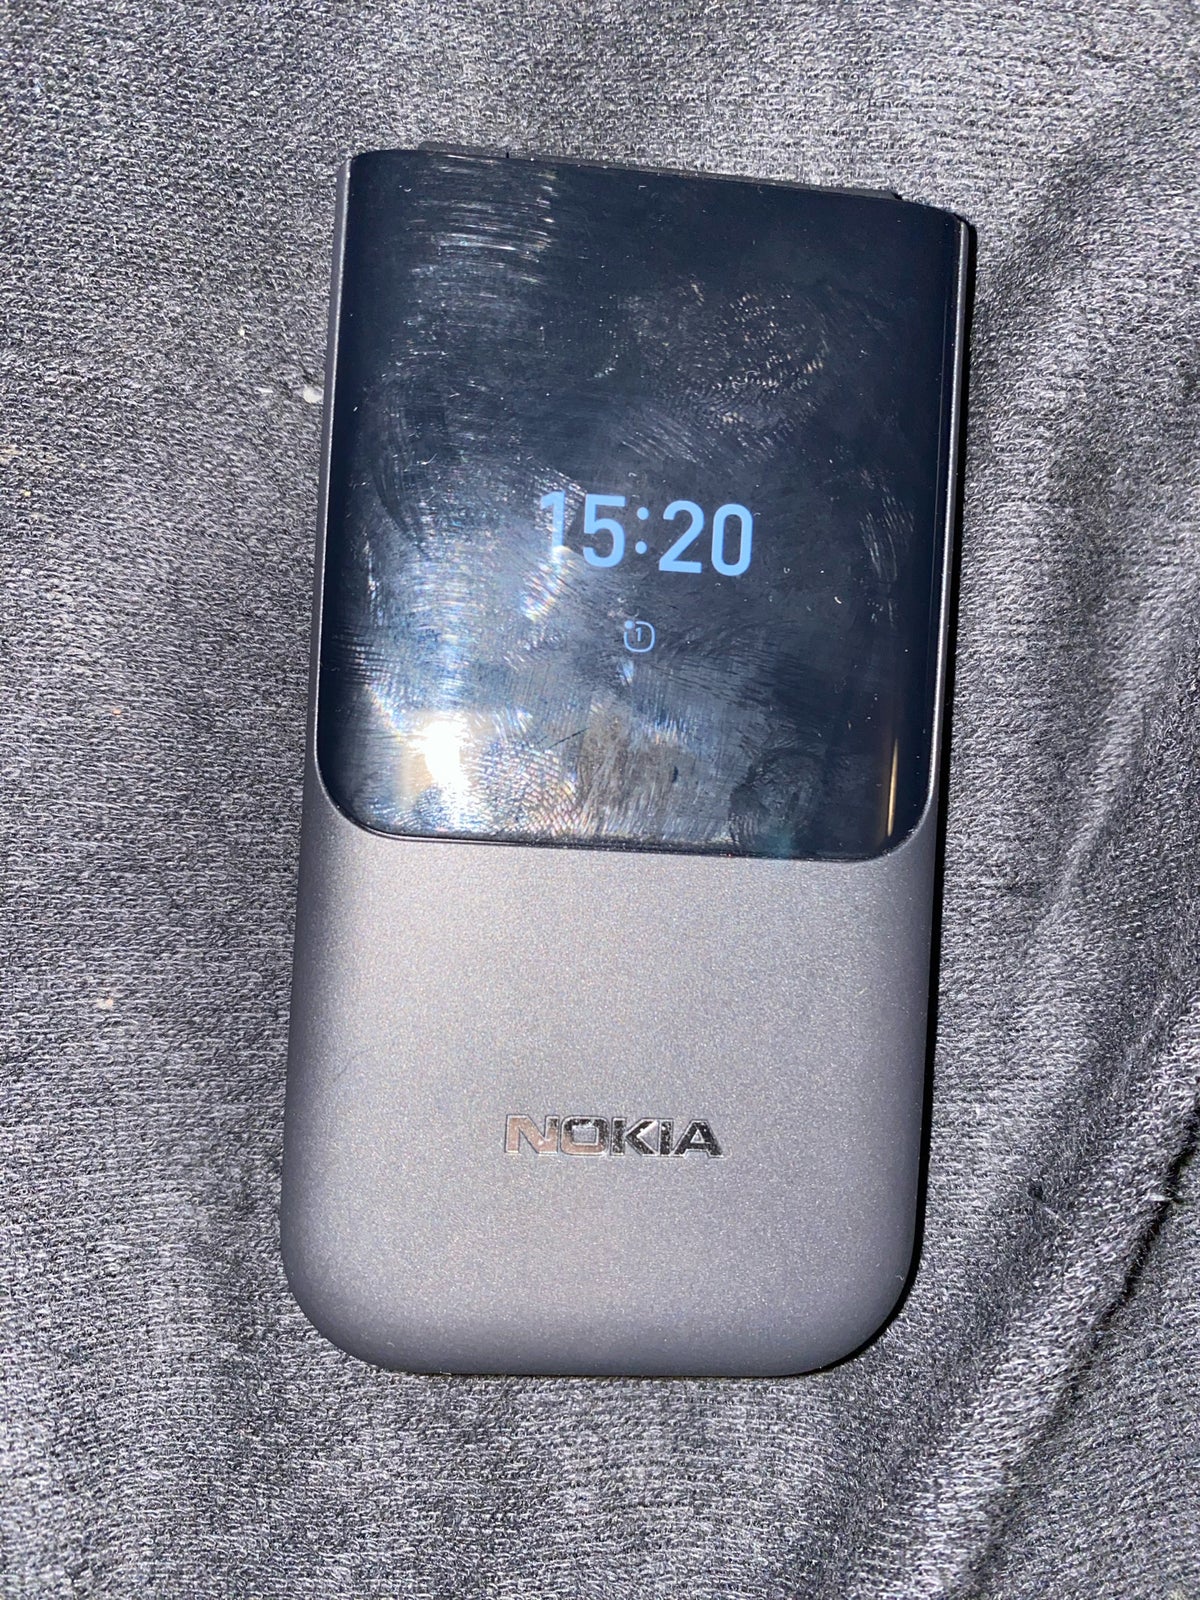 Nokia X, God